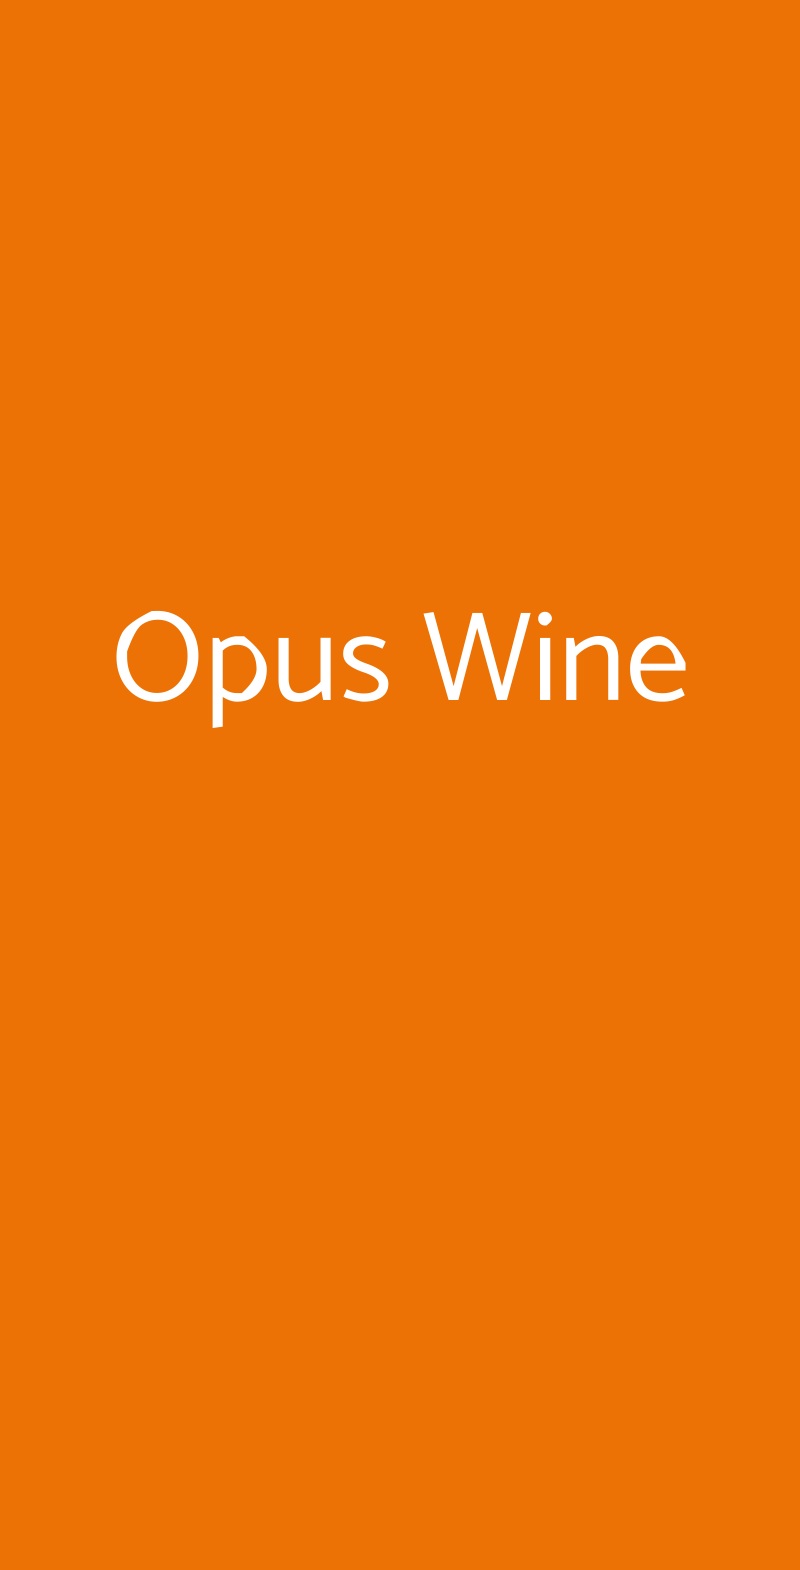 Opus Wine San Giovanni Rotondo menù 1 pagina